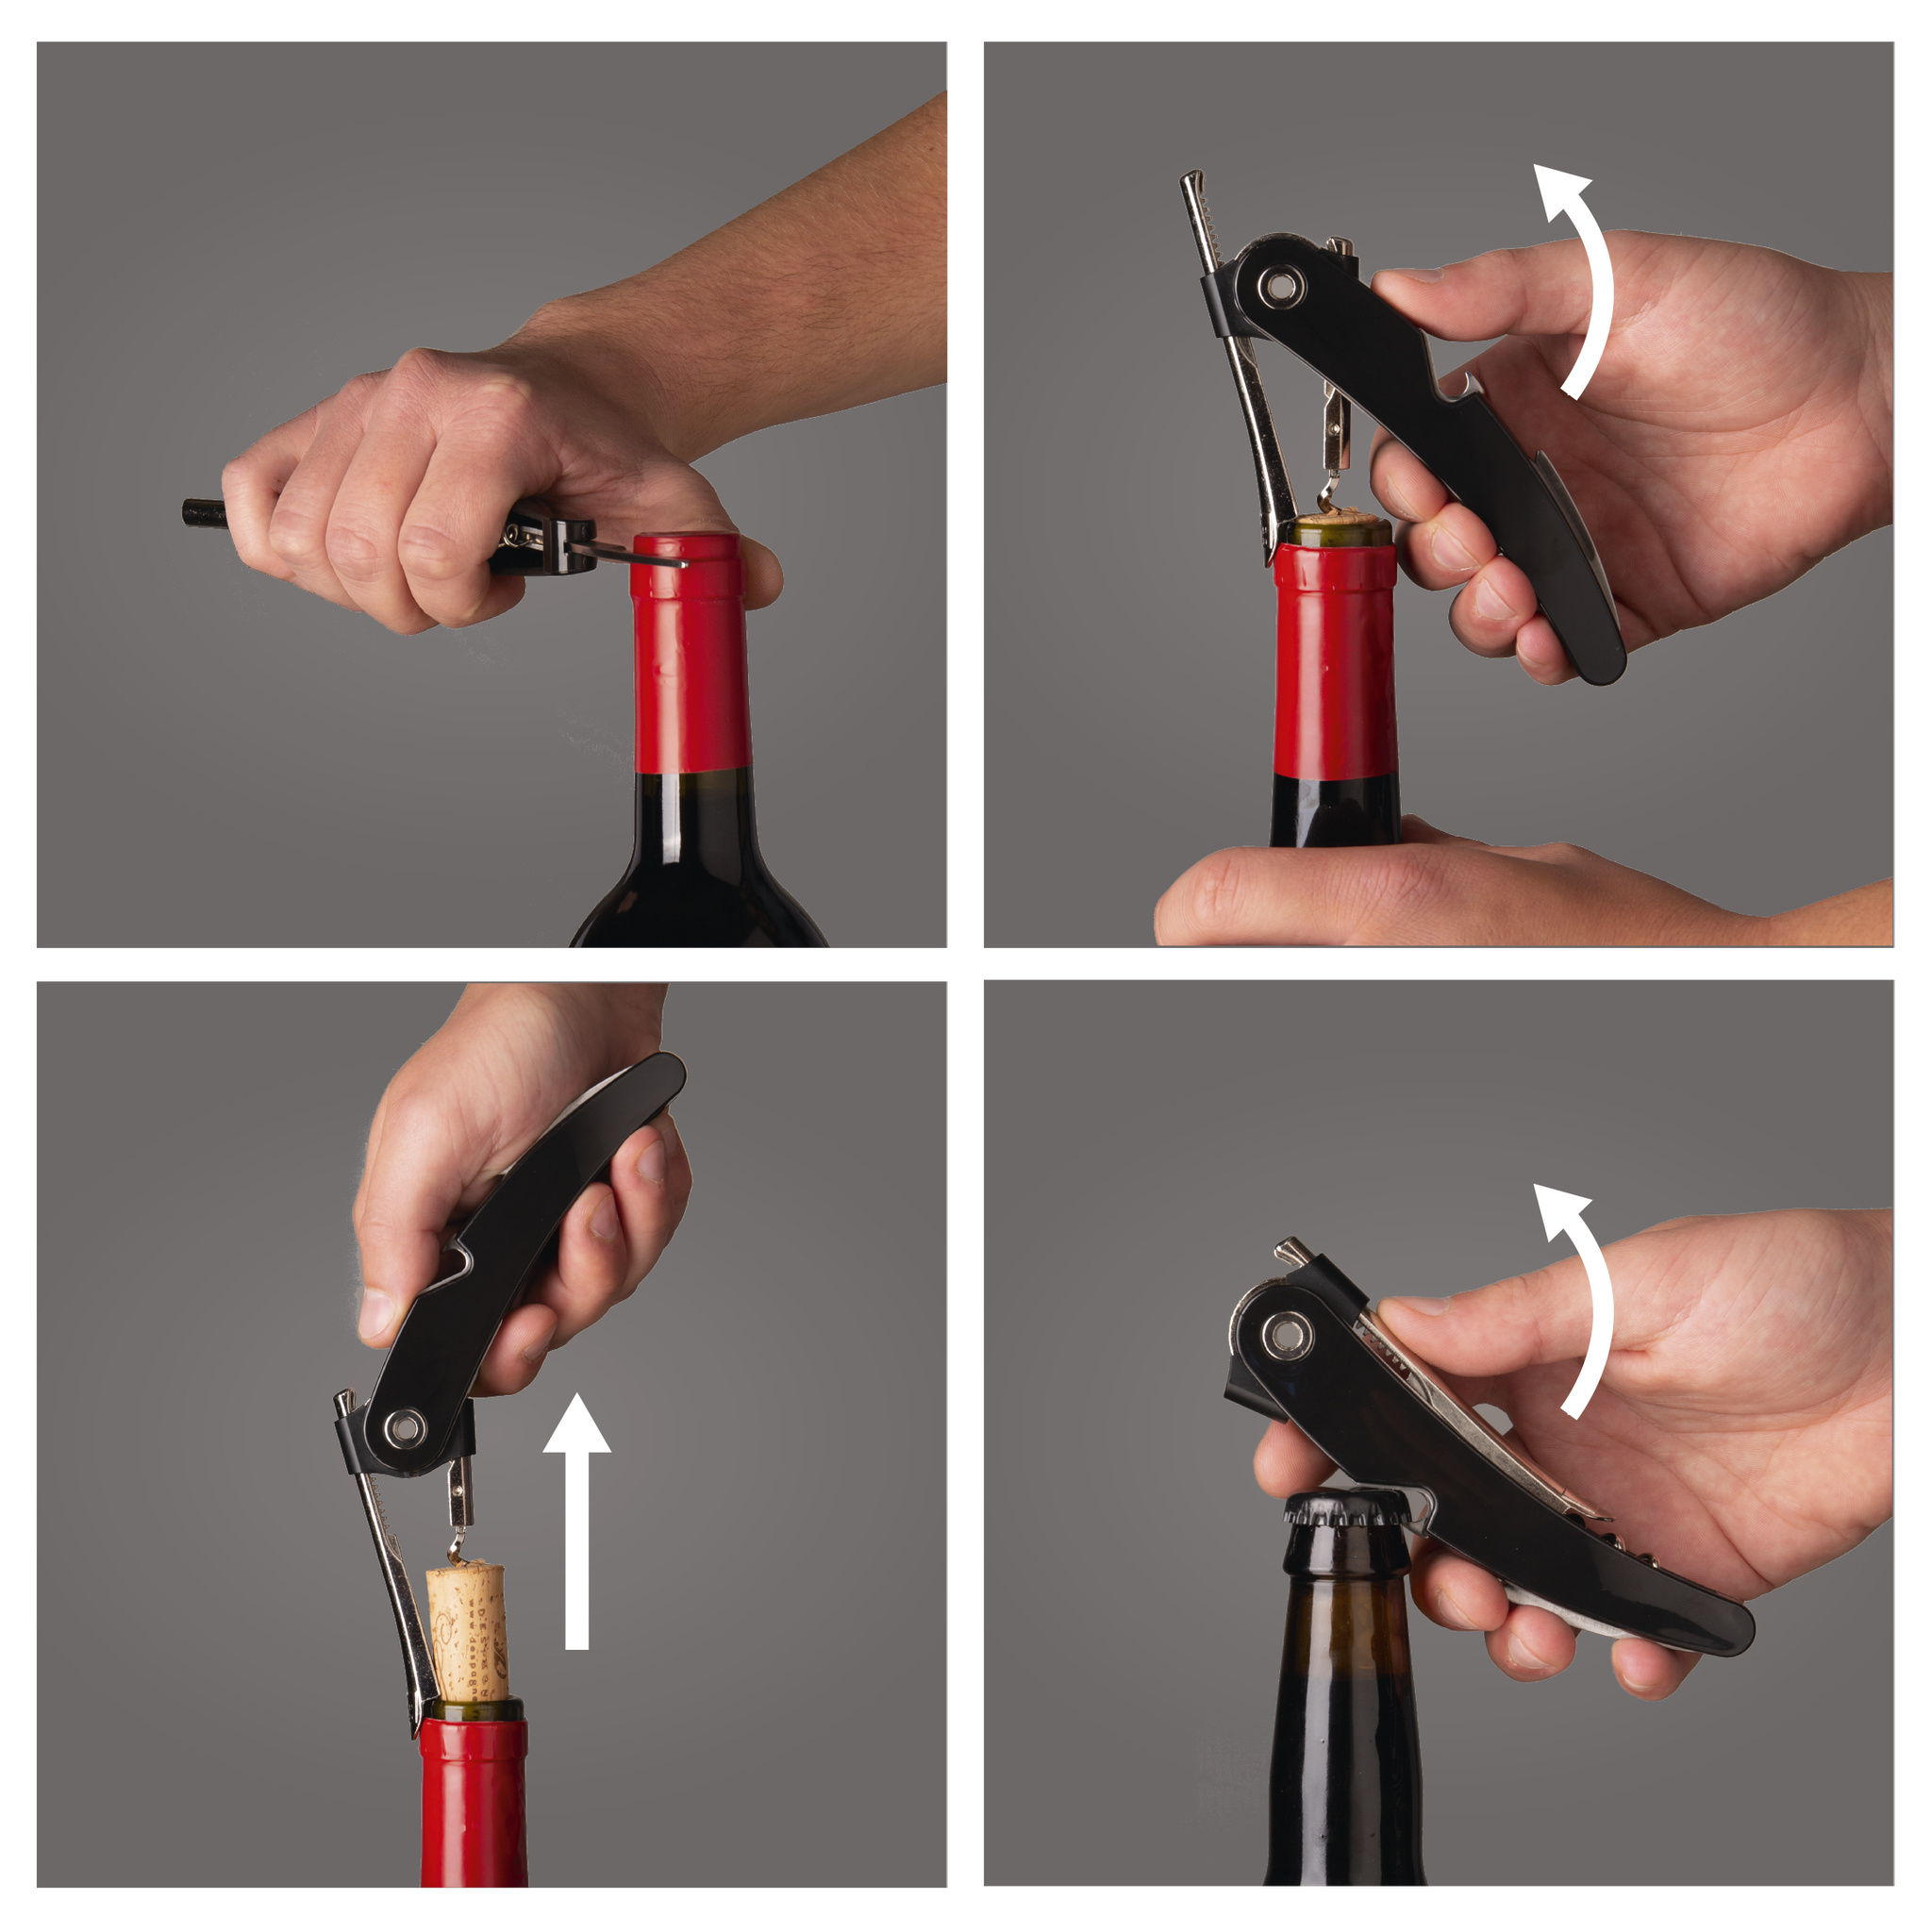 Vacu Vin Single Pull Corkscrew